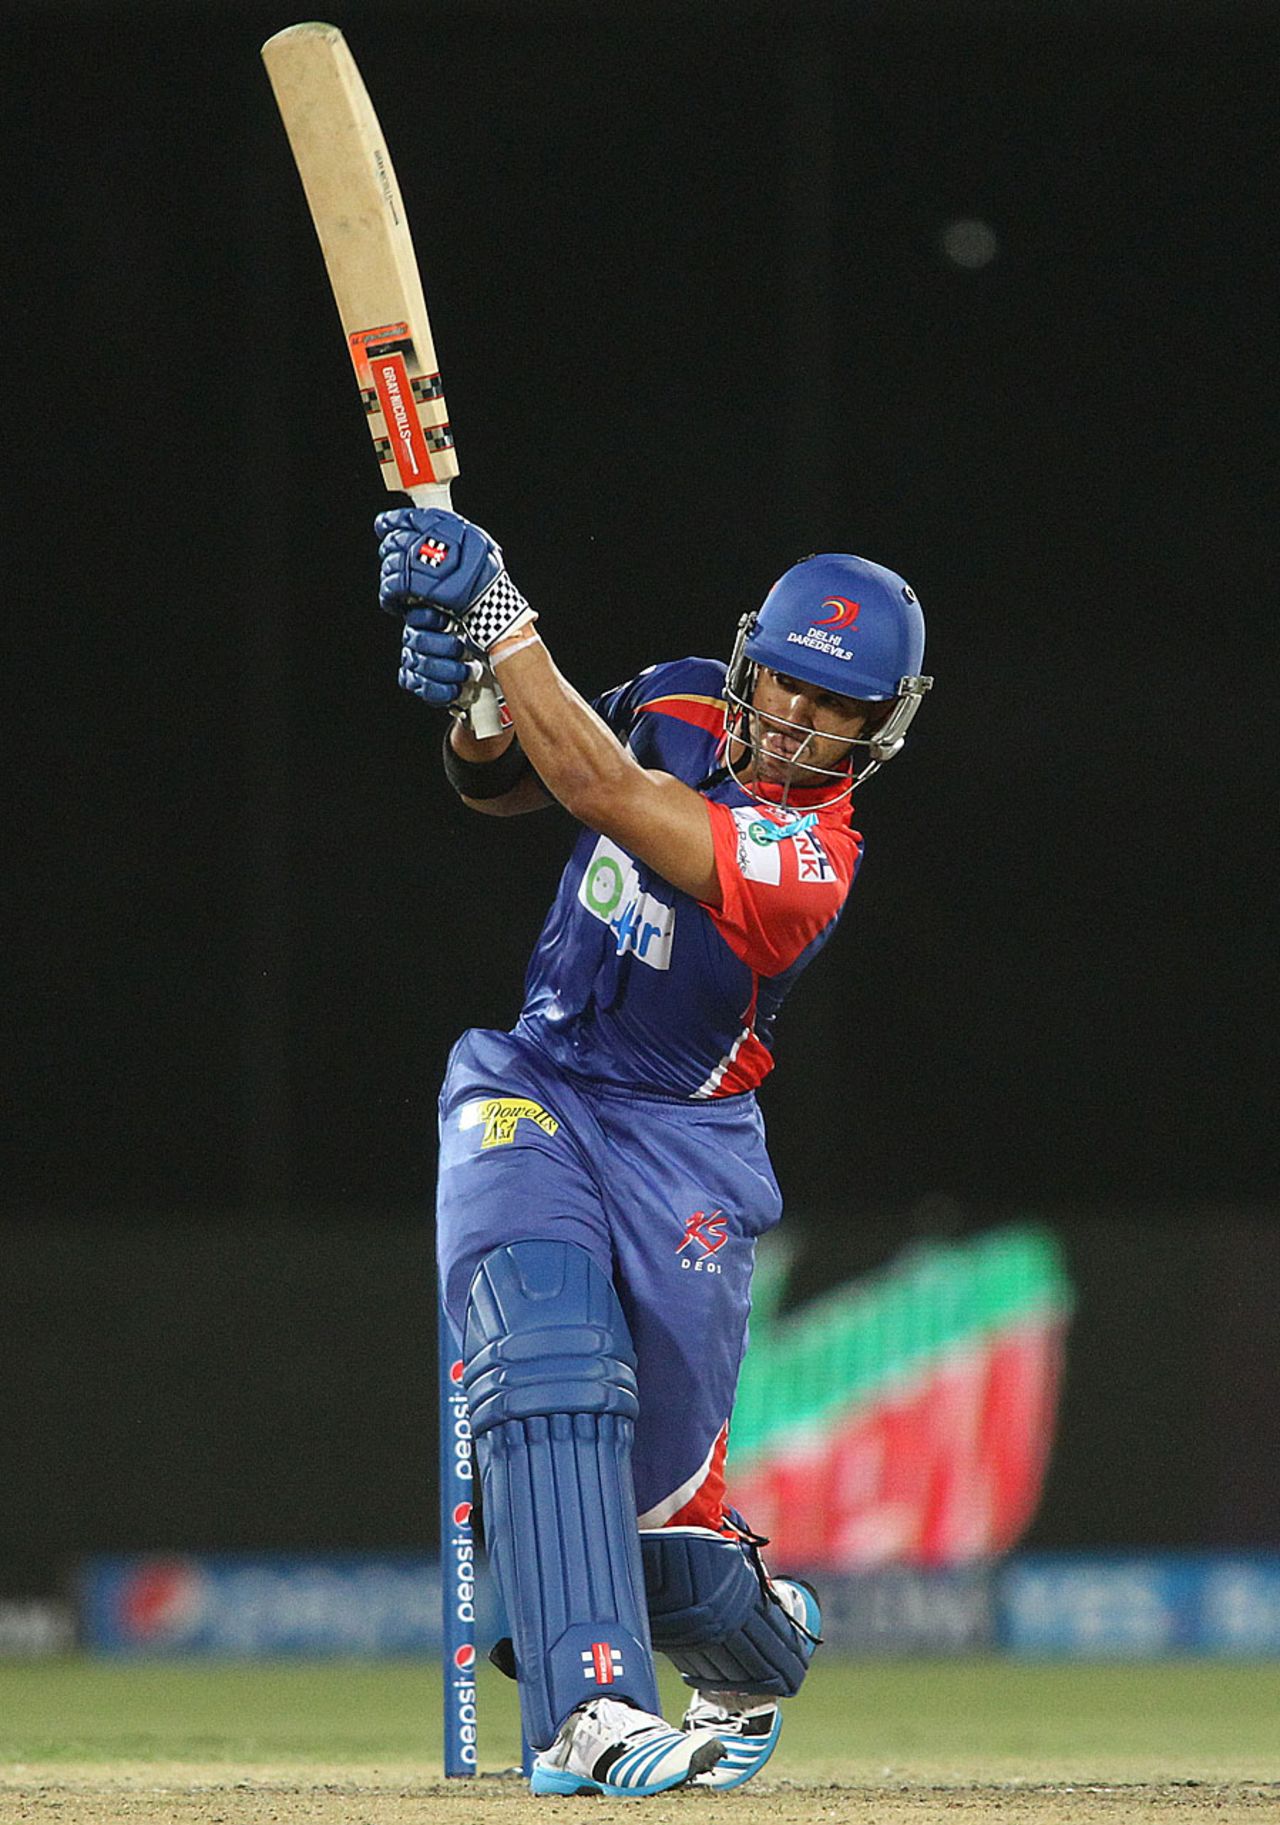 JP Duminy made 39 off 31 balls, Delhi Daredevils v Rajasthan Royals, IPL, Delhi, May 3, 2014